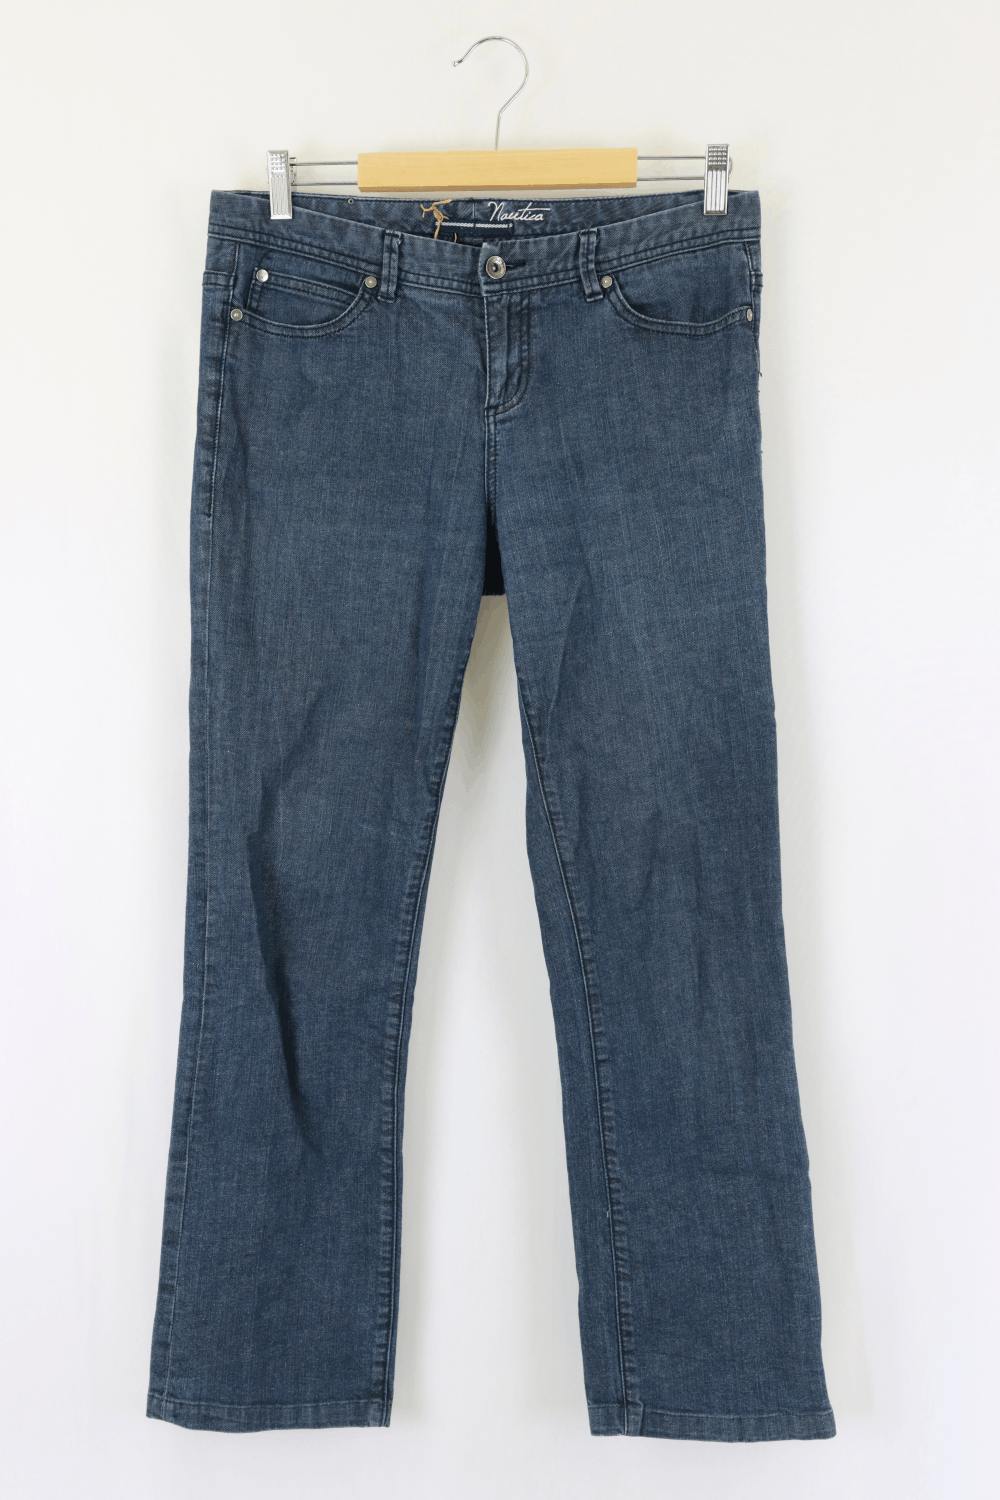 Nautica Blue Denim Jeans 10